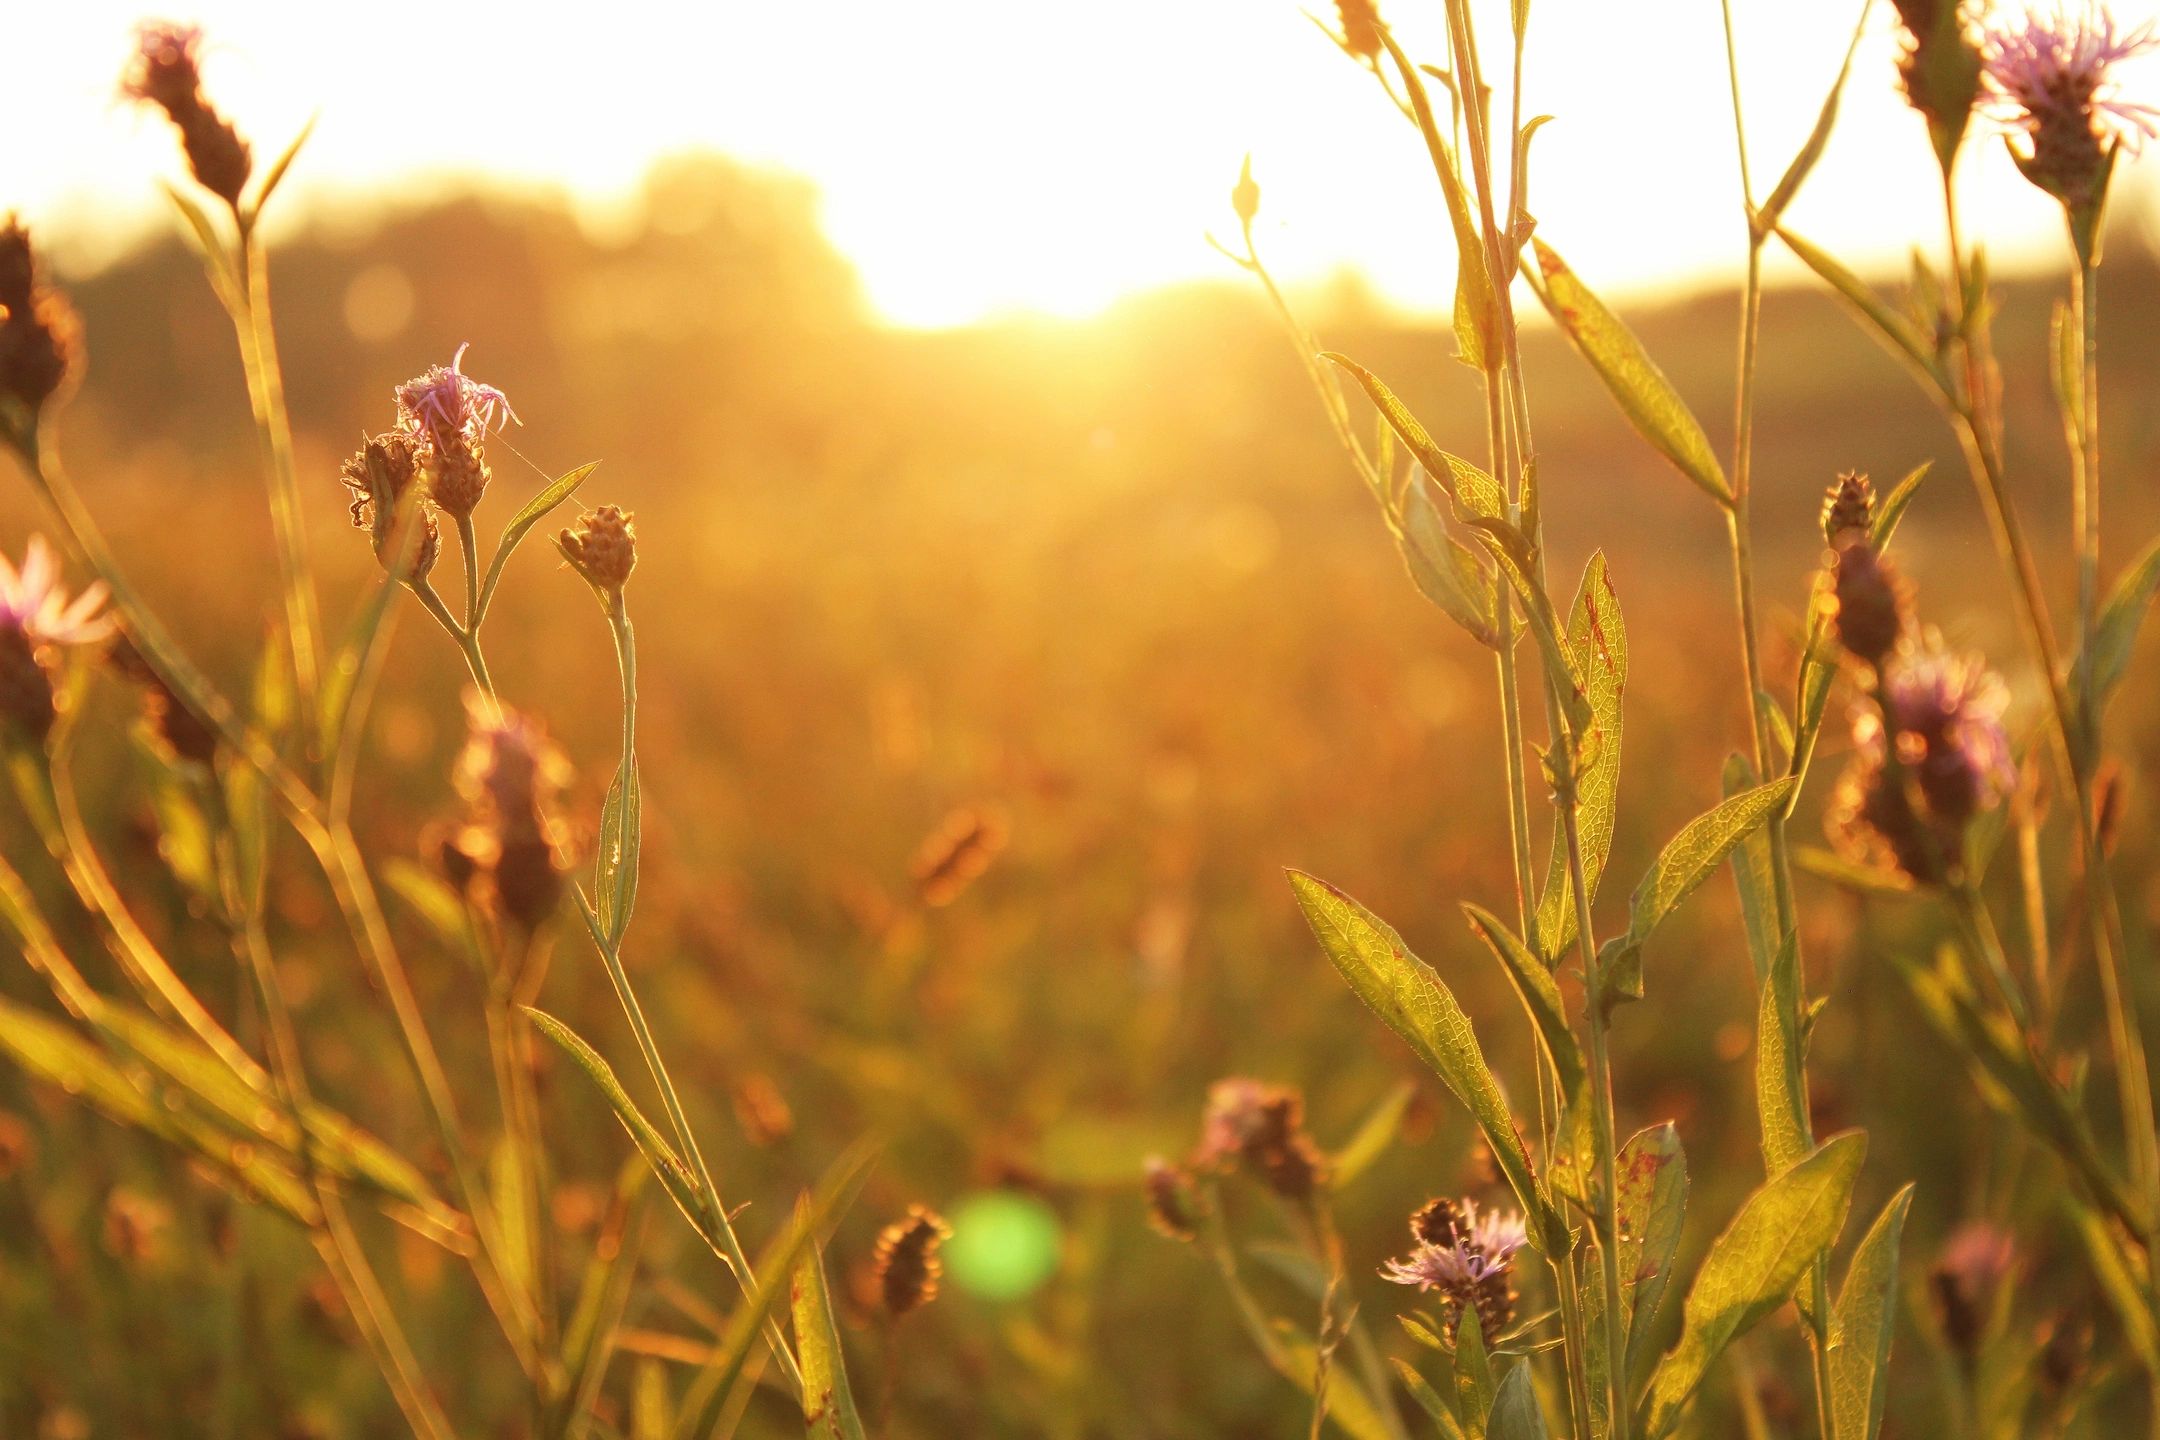 Sunrise highlighting wildflowers in a field